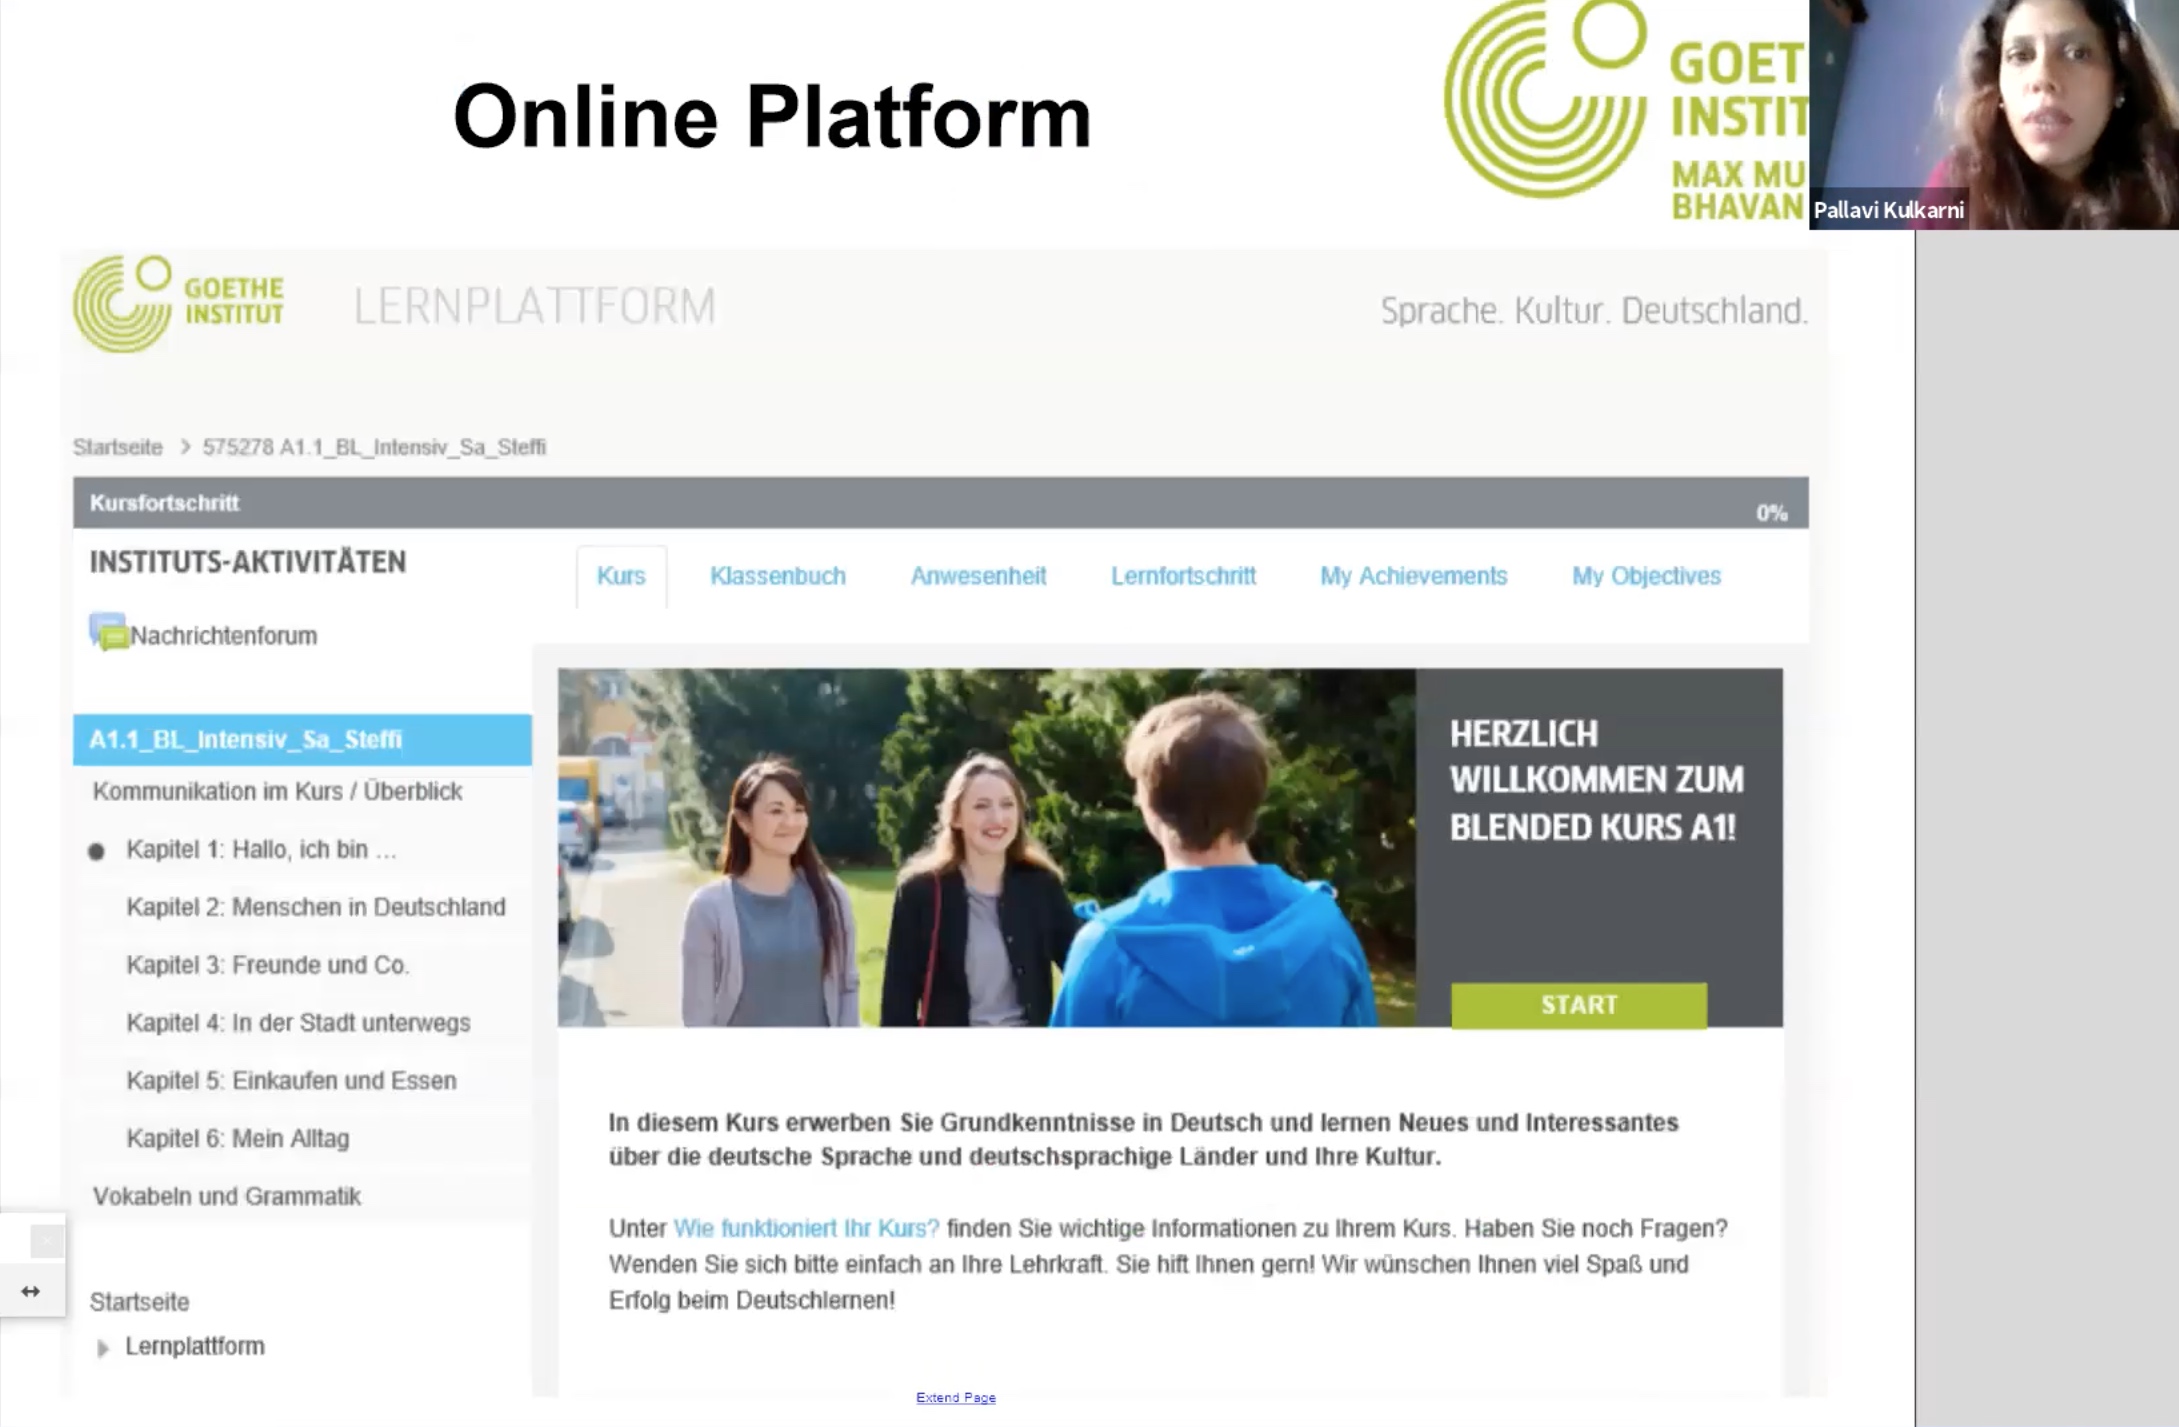 Goethe institut a1 german test